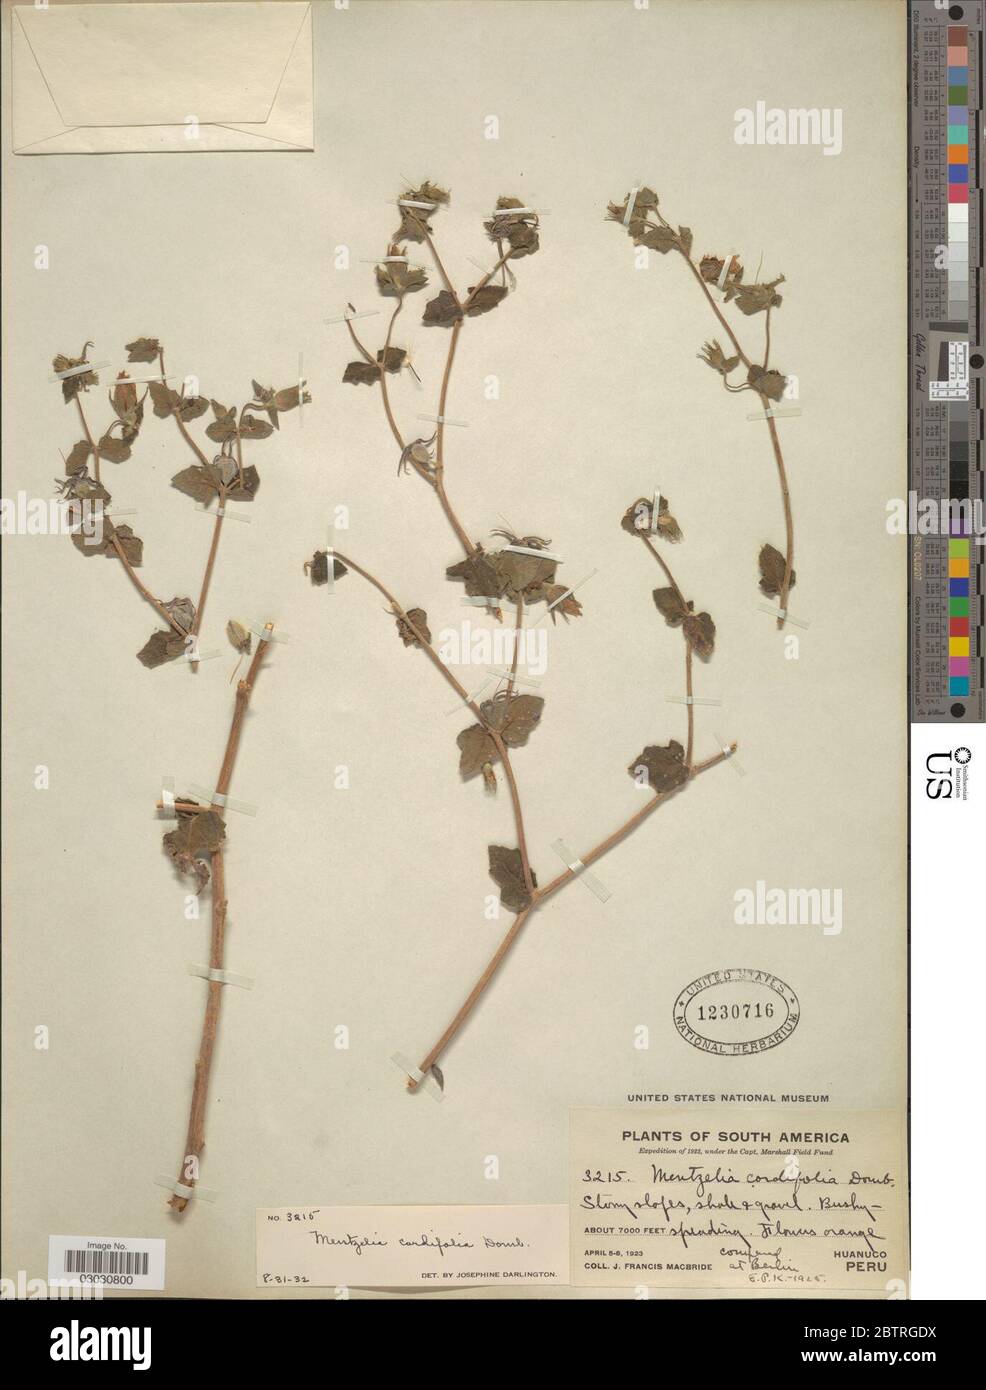 Mentzelia cordifolia Dombey ex Urb Gilg. Stock Photo